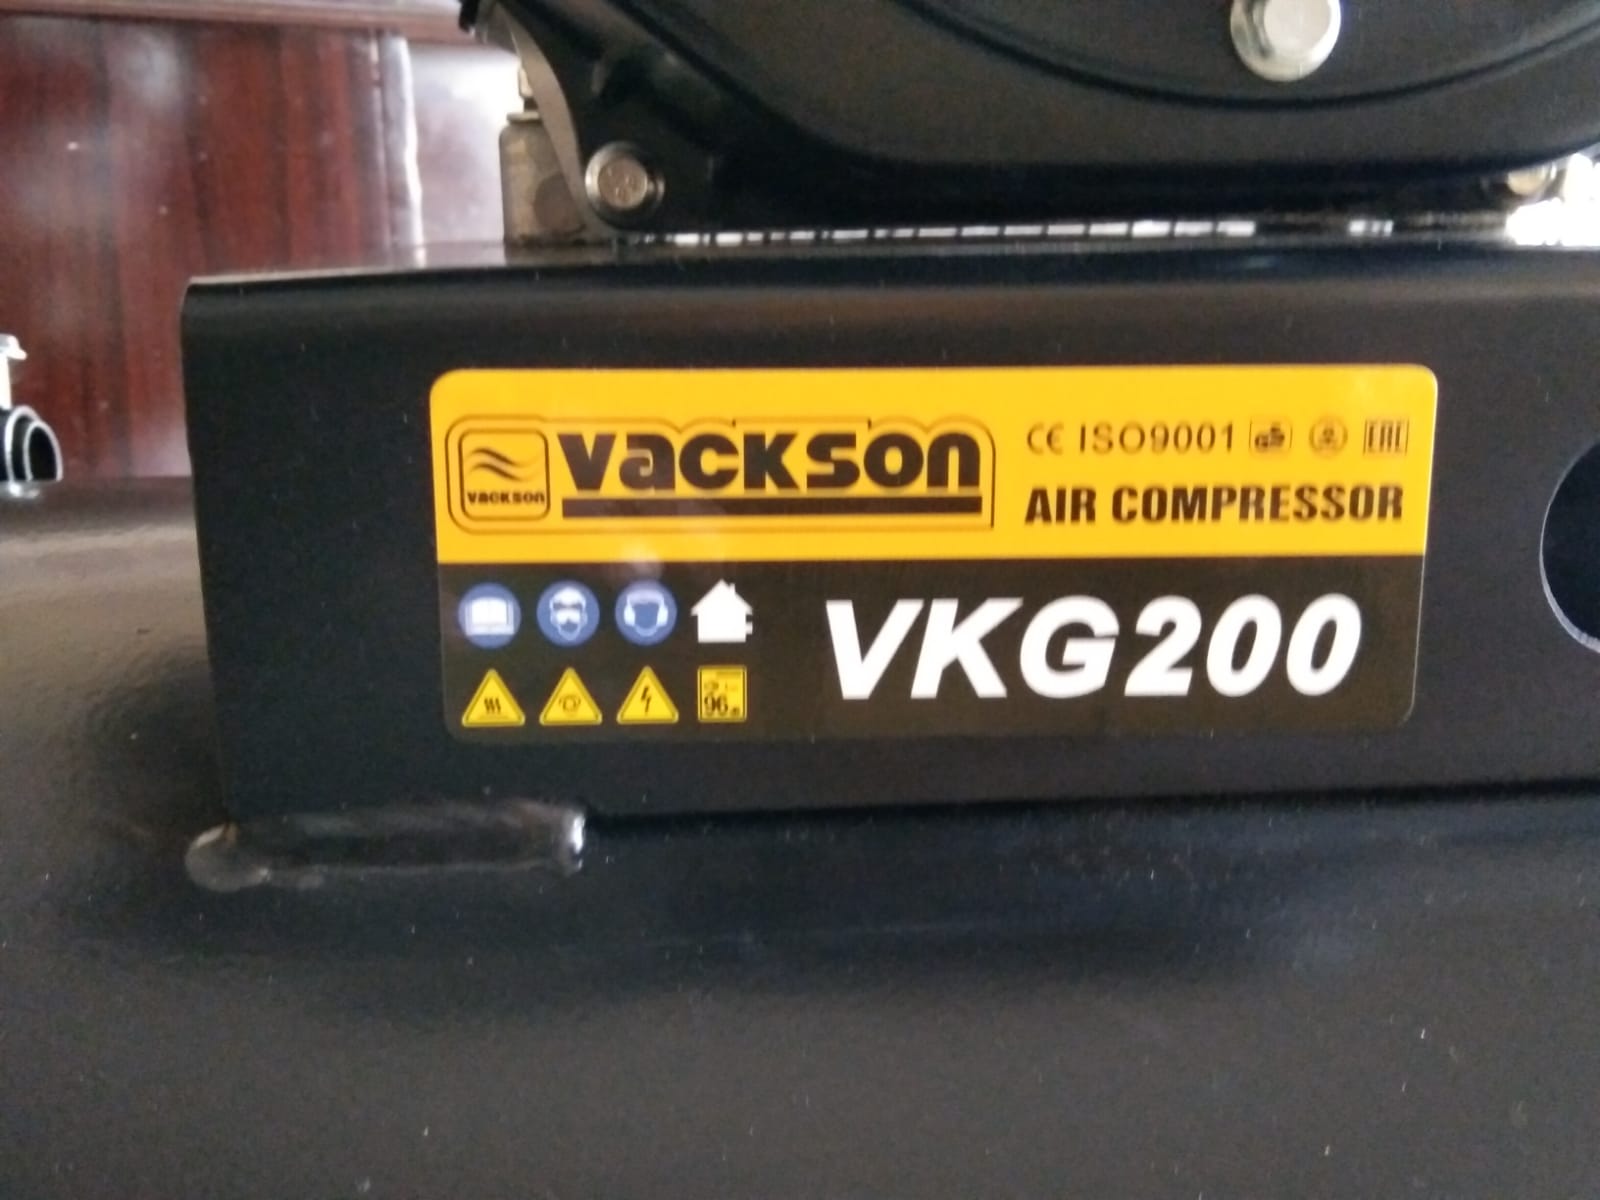 Vackson Air Compressor VKG200